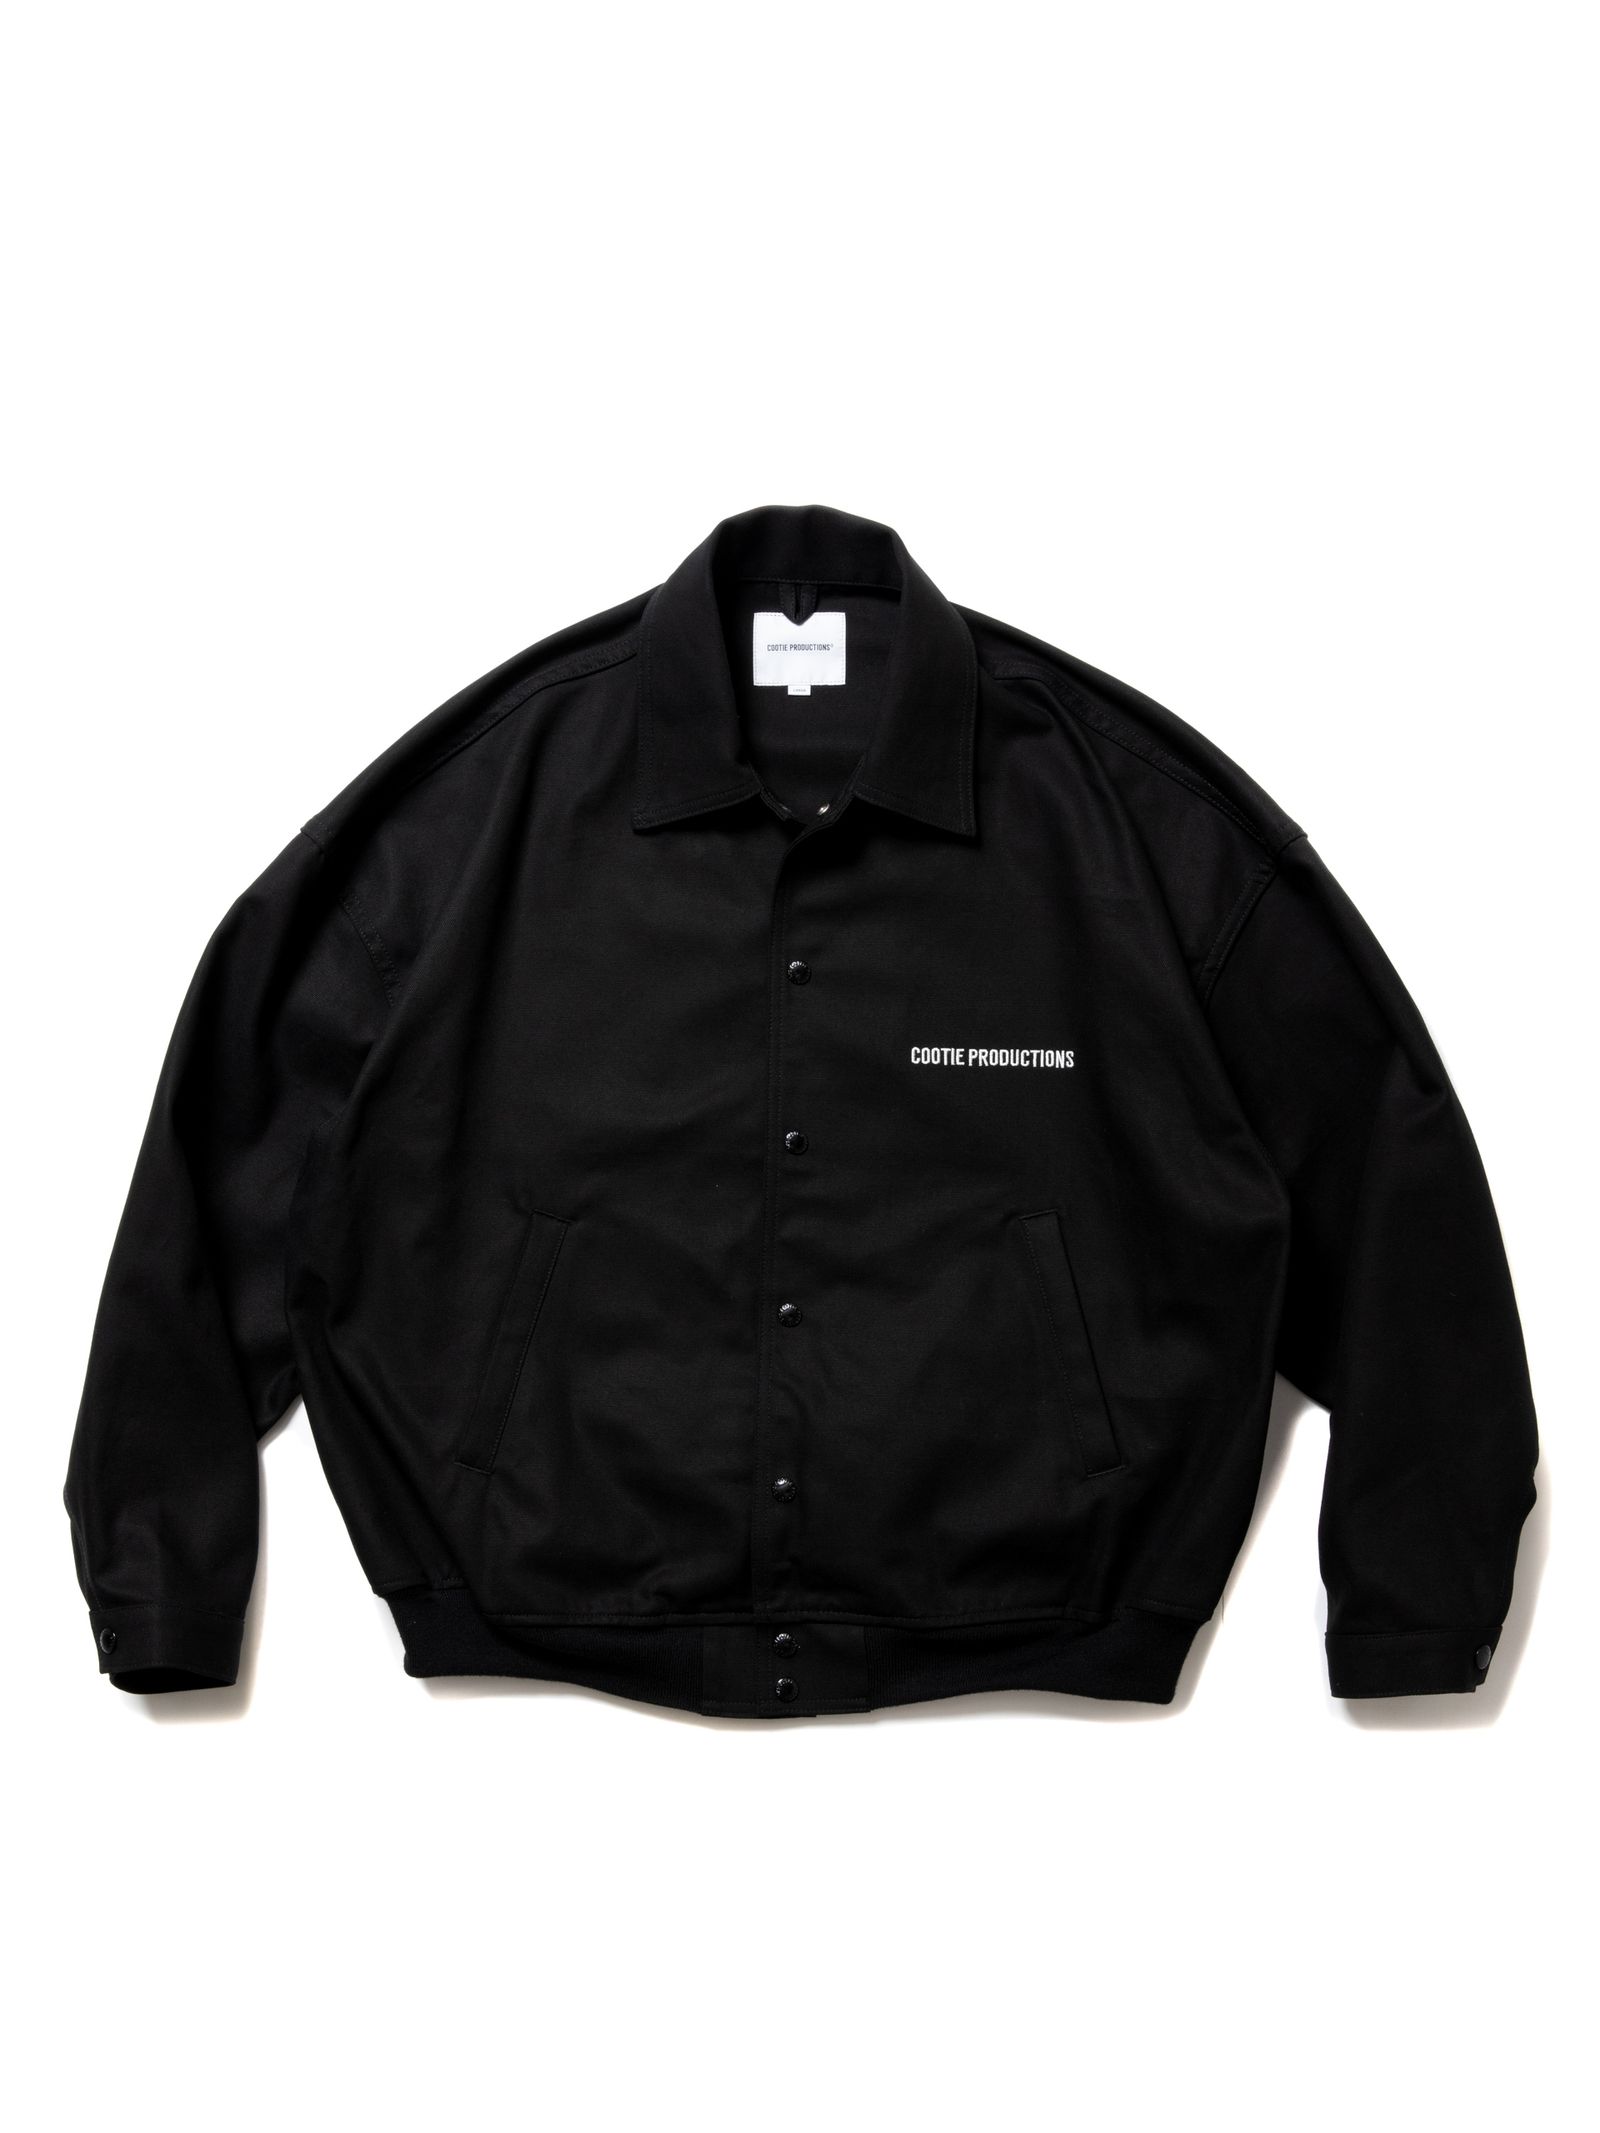 Cotton OX Award Jacket / Black / アワードジャケット - S